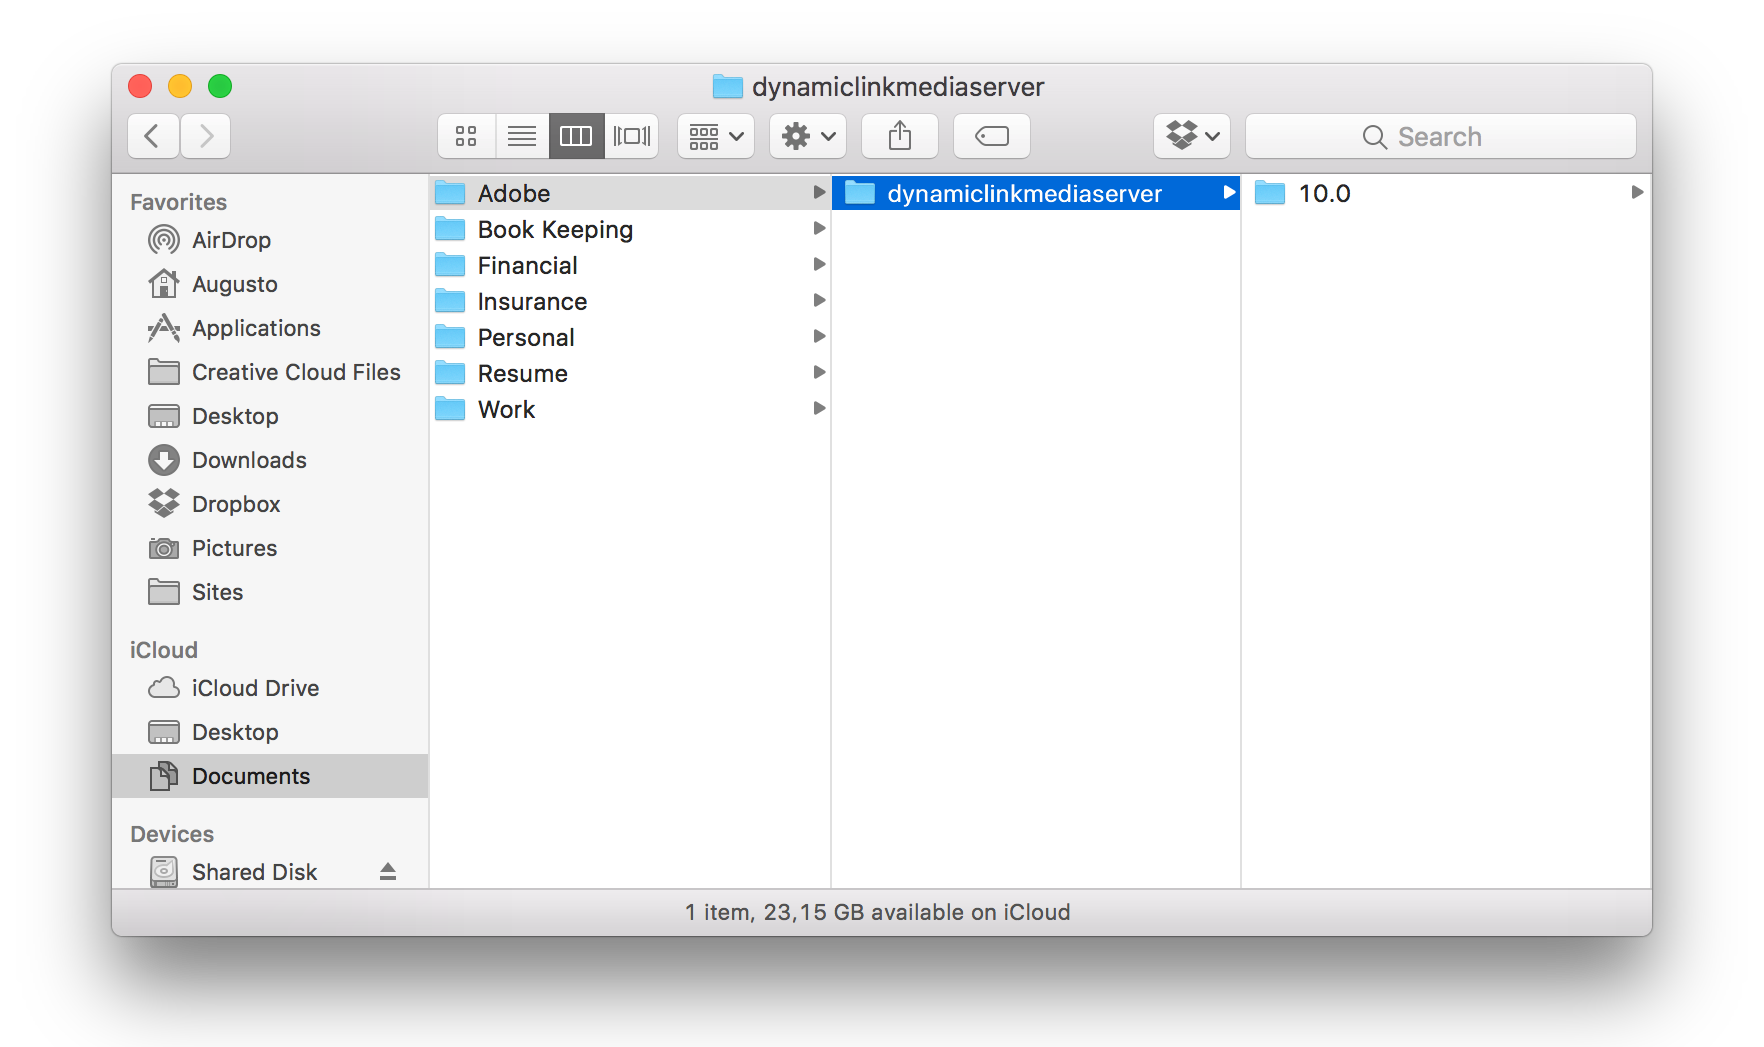 Remove dynamiclinkmediaserver folder created by Adobe apps